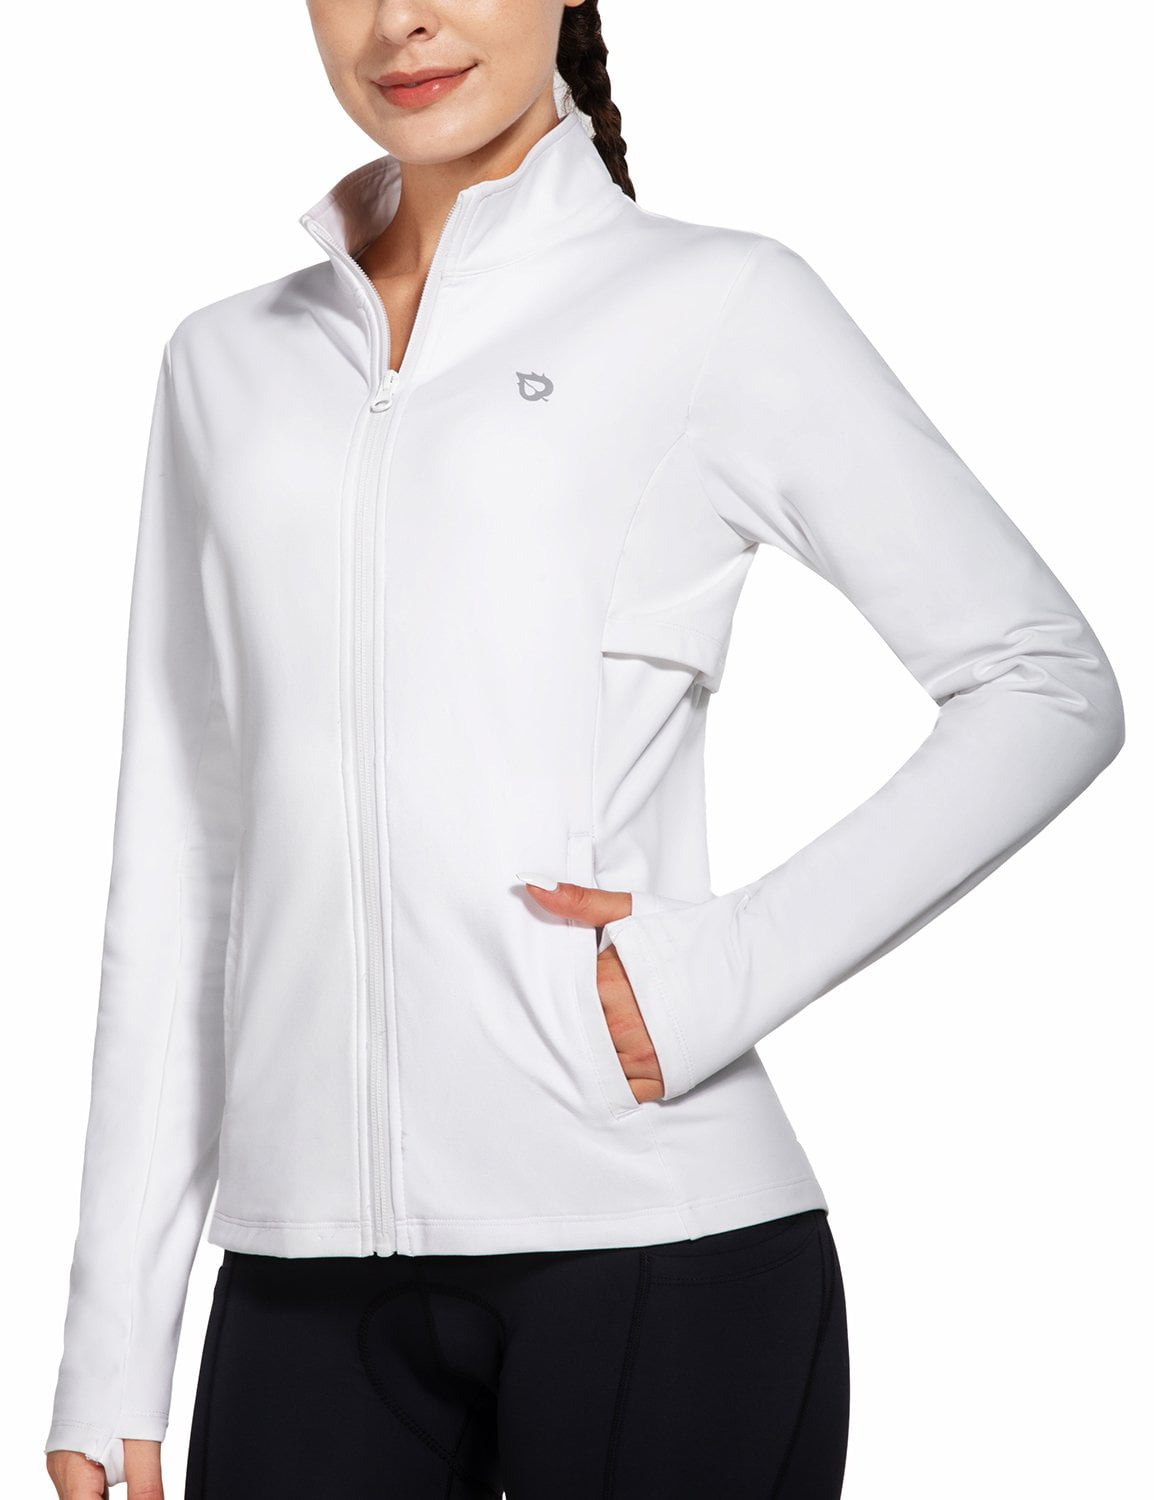 BALEAF Women's Running Jacket Slim Fit Soft Lightweight Sports Tops with Full Zip Side Pocket